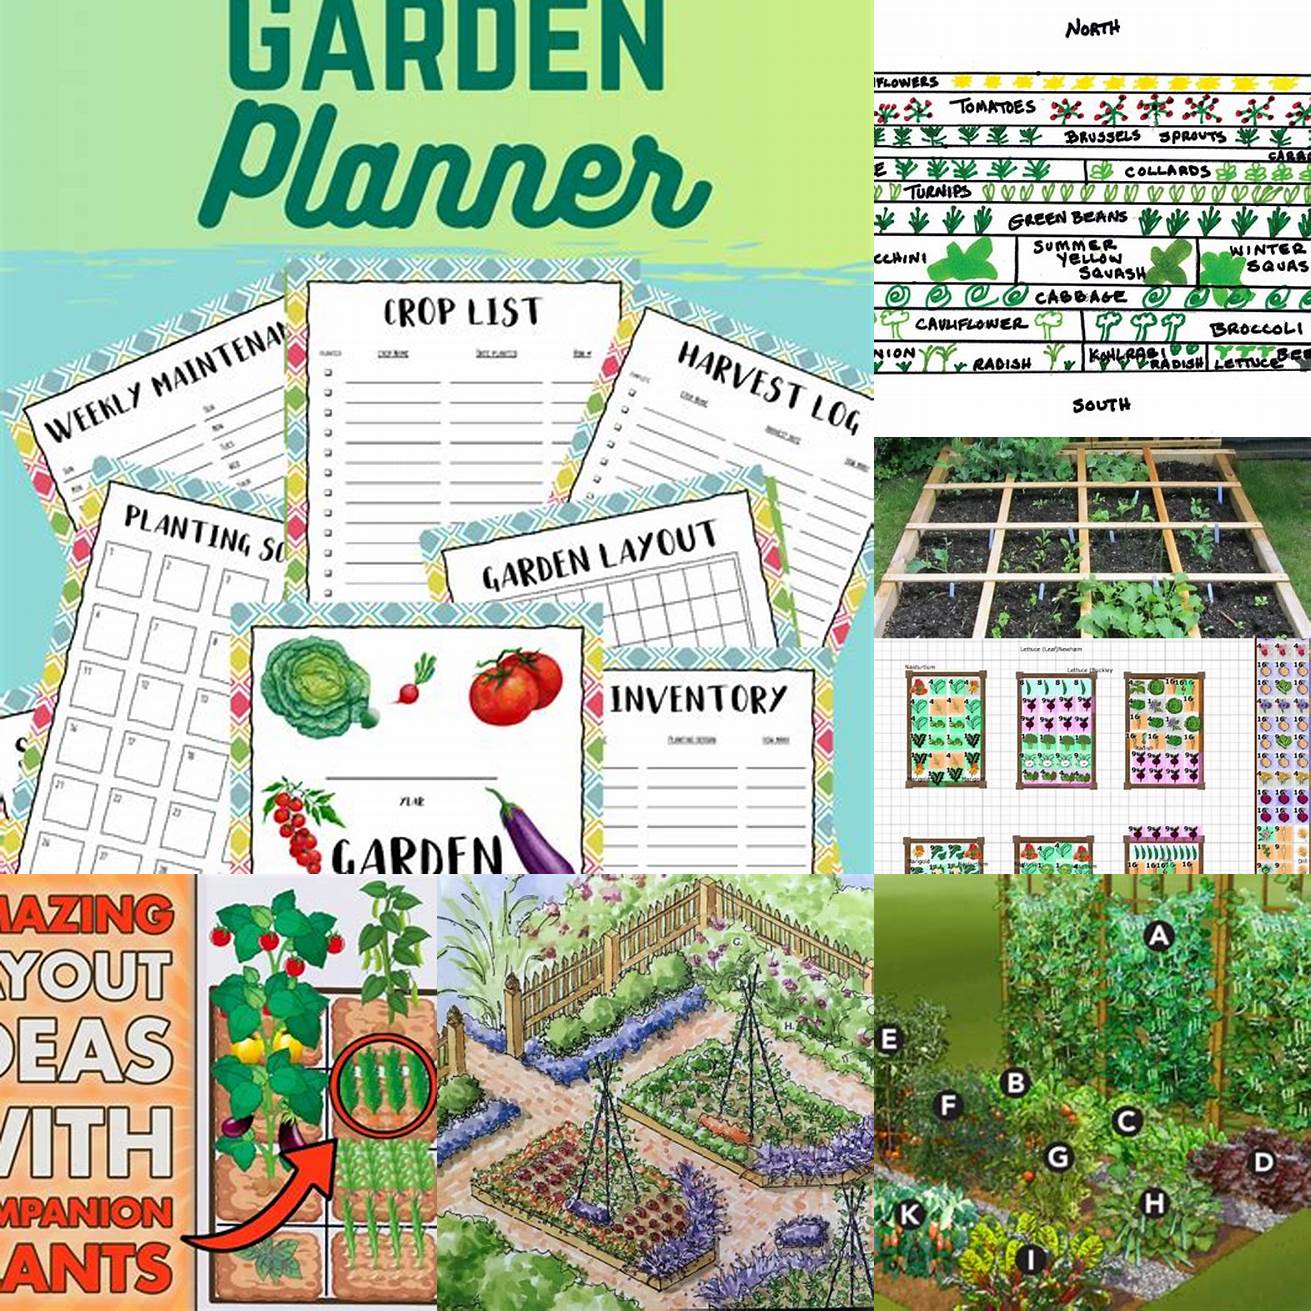 Plan Your Garden Plan your garden before planting